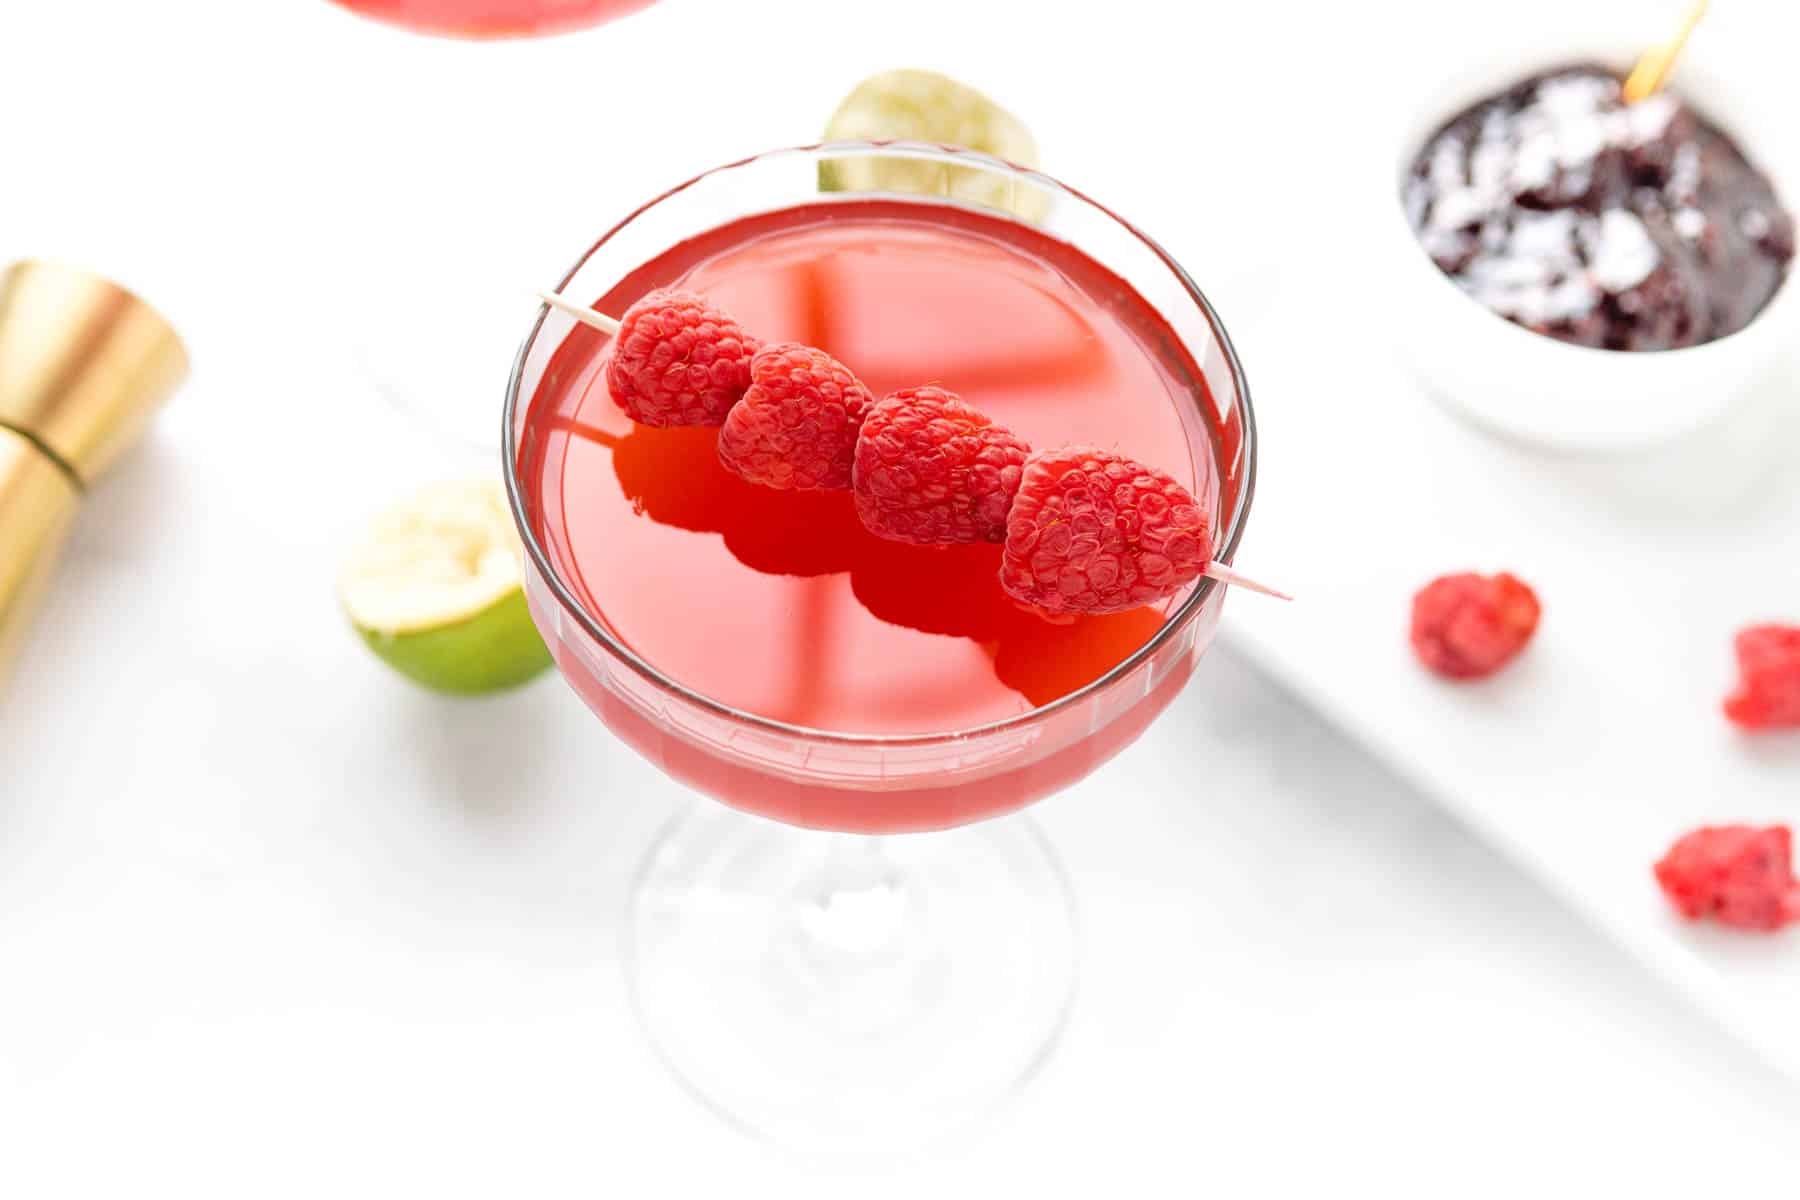 Raspberries garnish a cocktail in a stemmed glass.